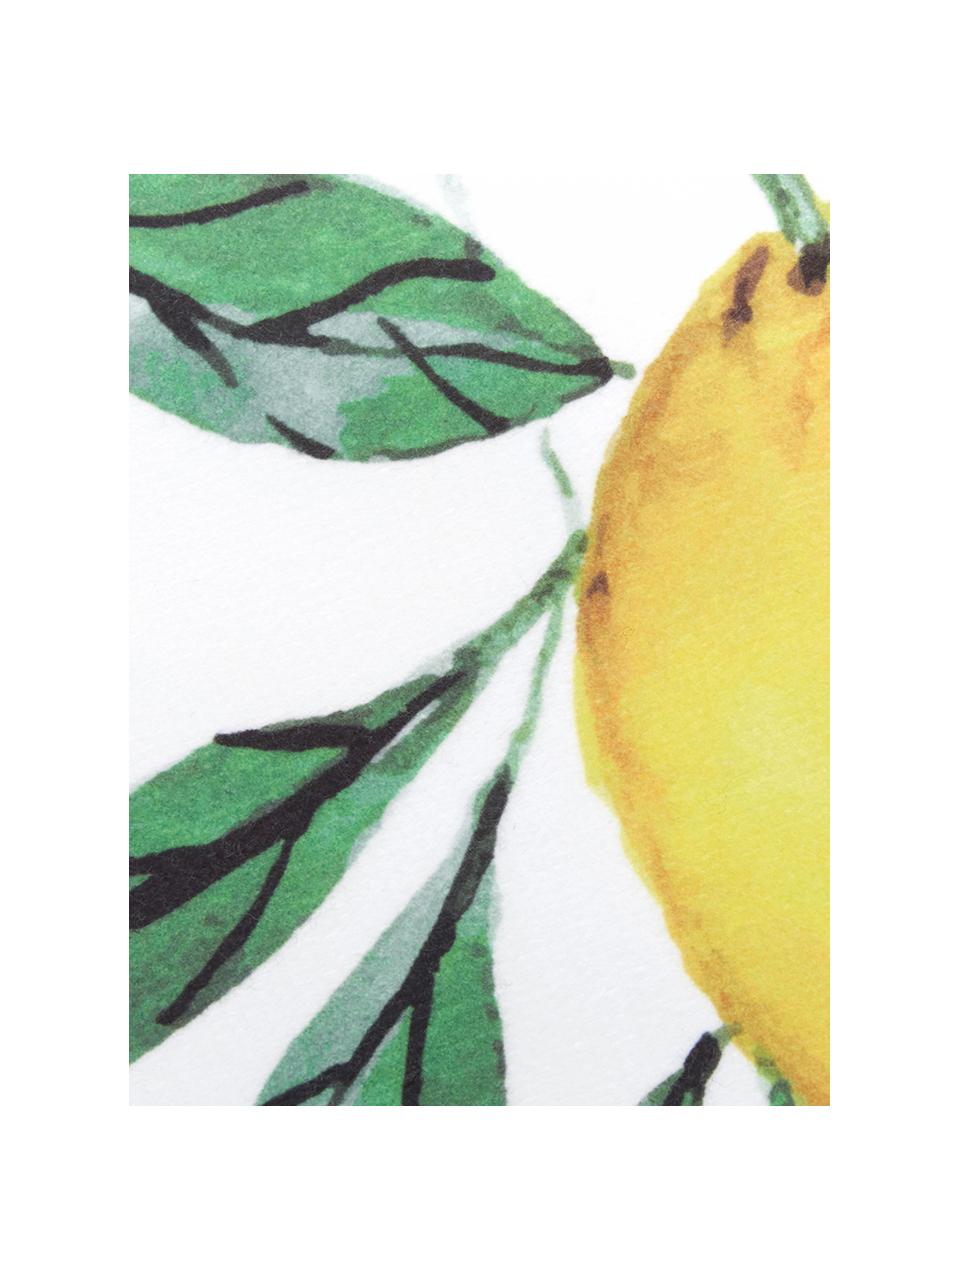 Toalla de playa ligera Lemon, 55% poliéster, 45% algodón
Gramaje ligero 340 g/m², Blanco, verde, amarillo, An 70 x L 150 cm